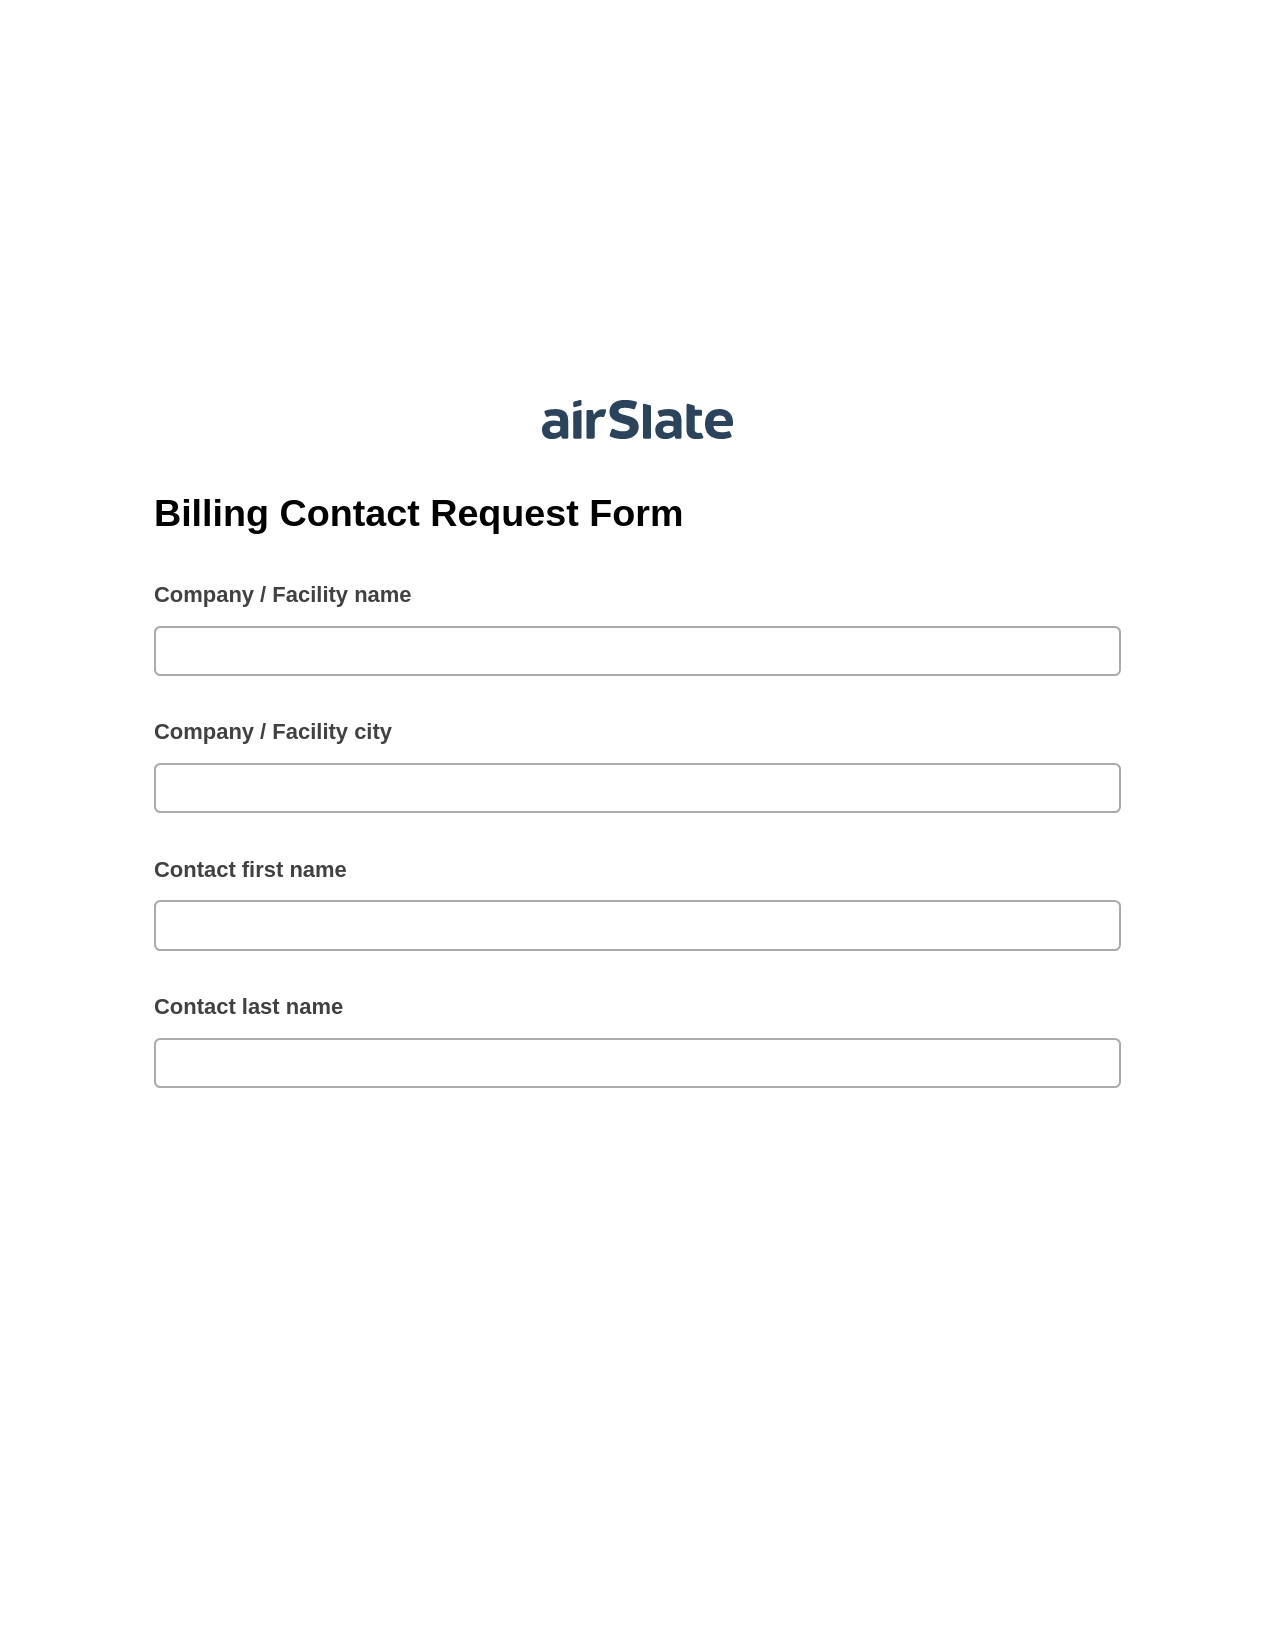 Multirole Billing Contact Request Form Pre-fill Document Bot, SendGrid send Campaign bot, Slack Two-Way Binding Bot